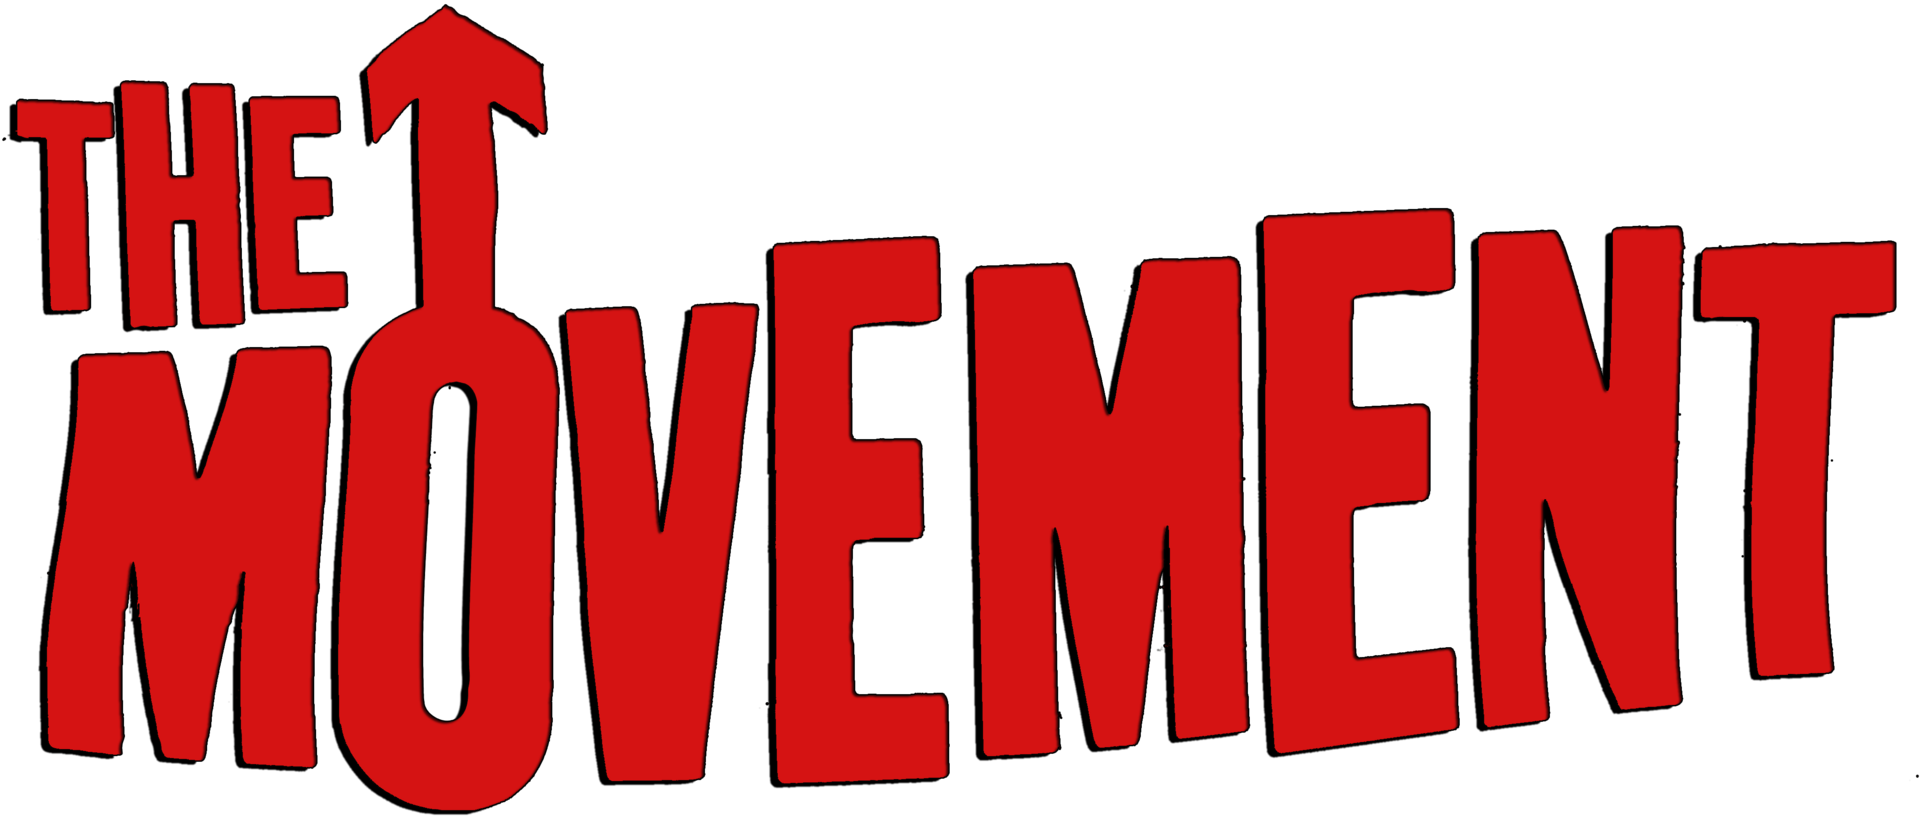 The Movement Logo